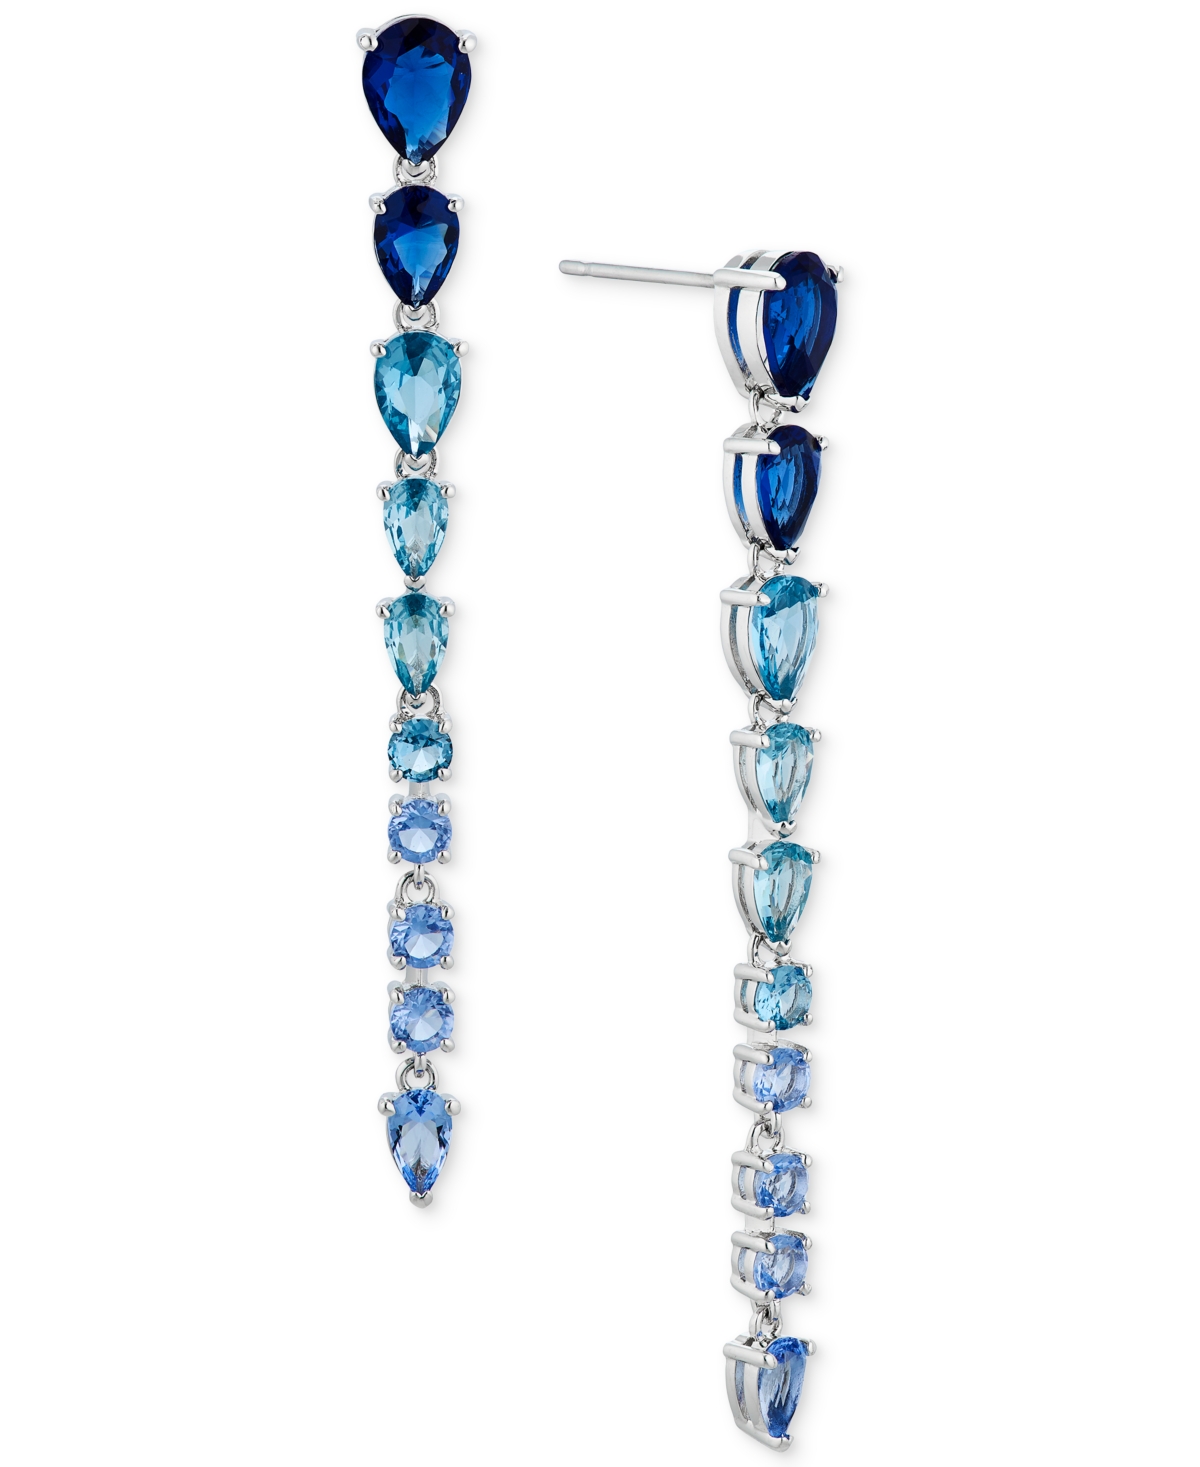 Eliot Danori Silver-tone Mixed Stone Long Linear Drop Earrings, Created For Macy's In Blue